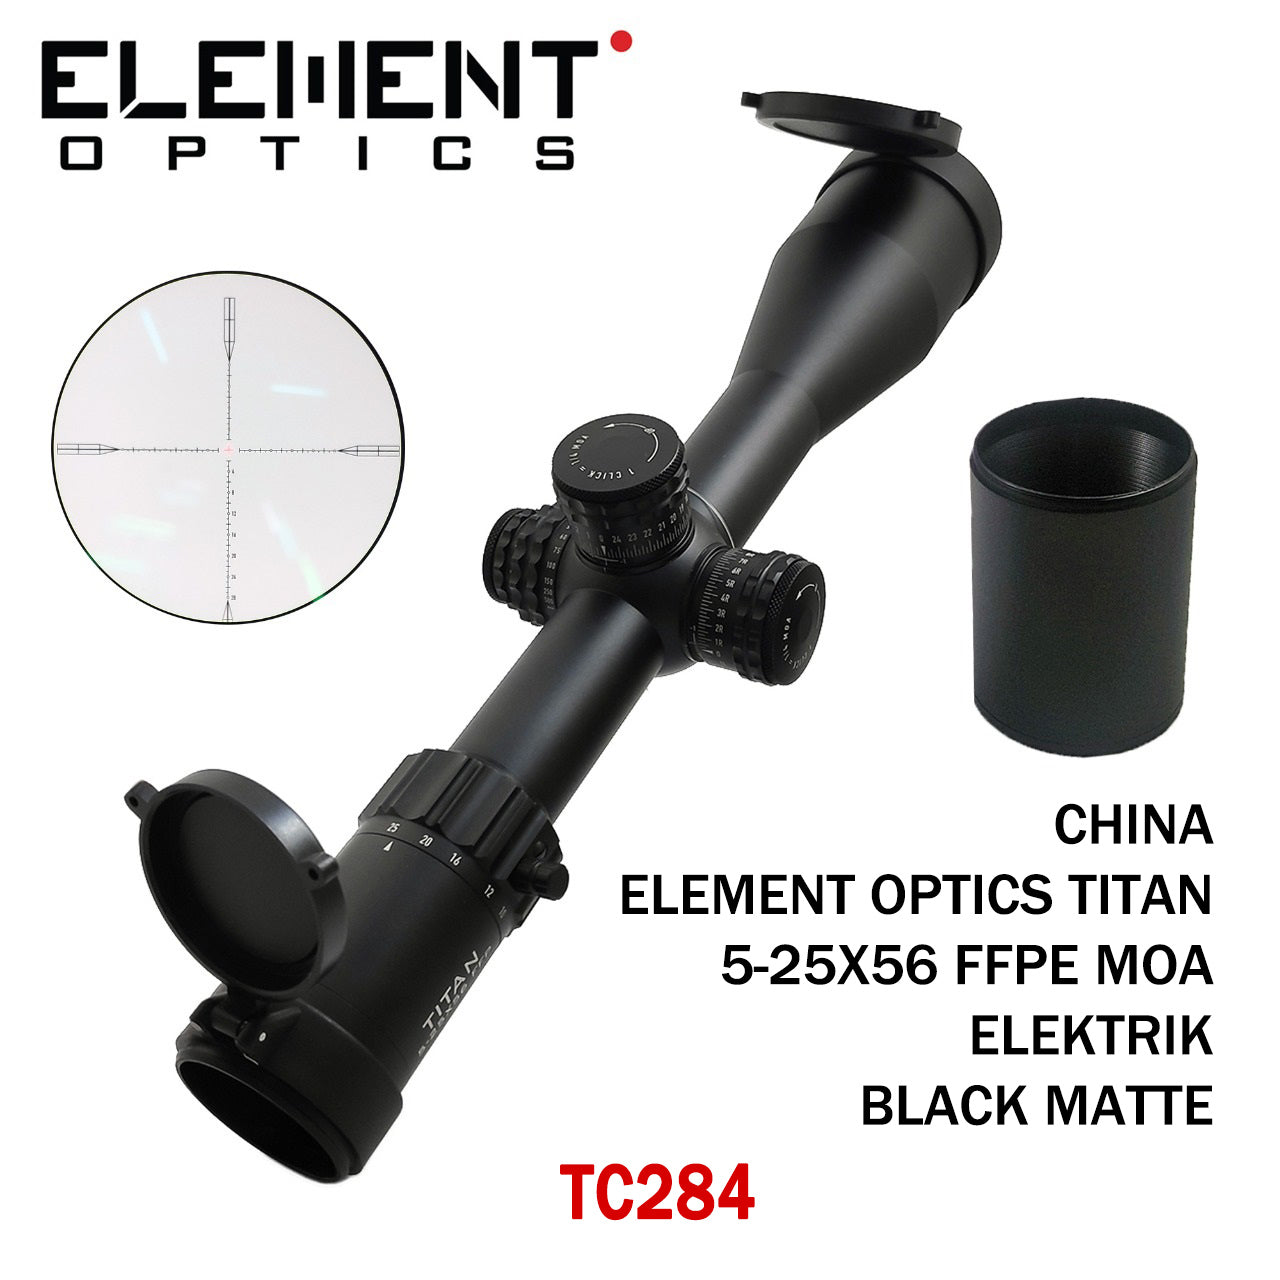 Element Optics Titan 5-25x56 FFP, EHR-1C MOA Reticle